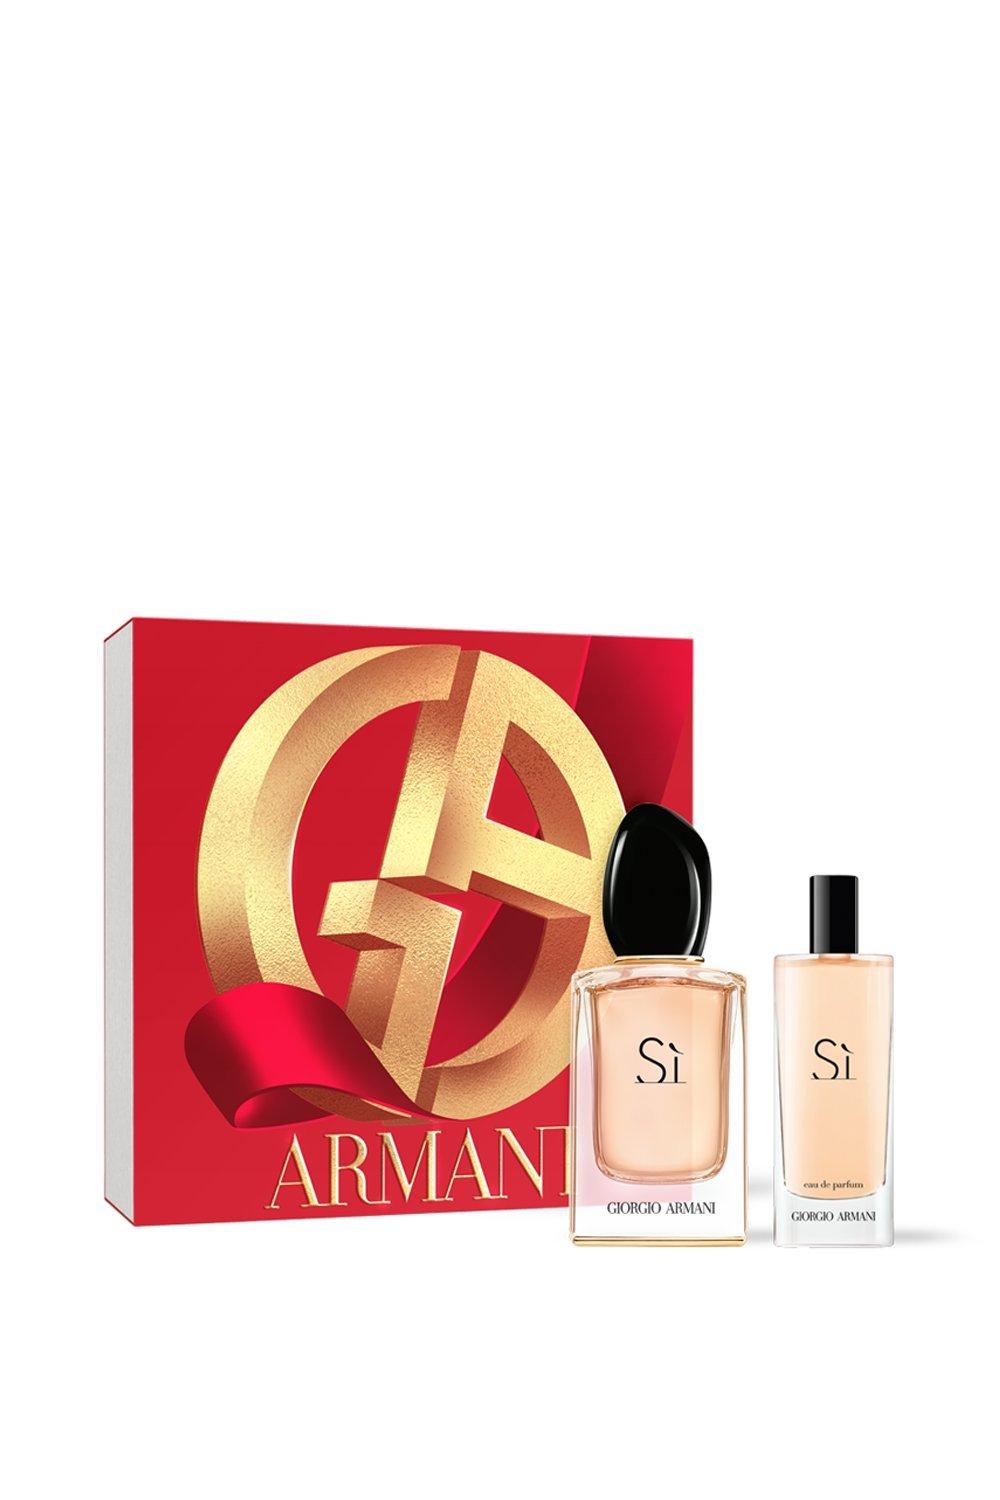 armani si eau de parfum 50ml giftset